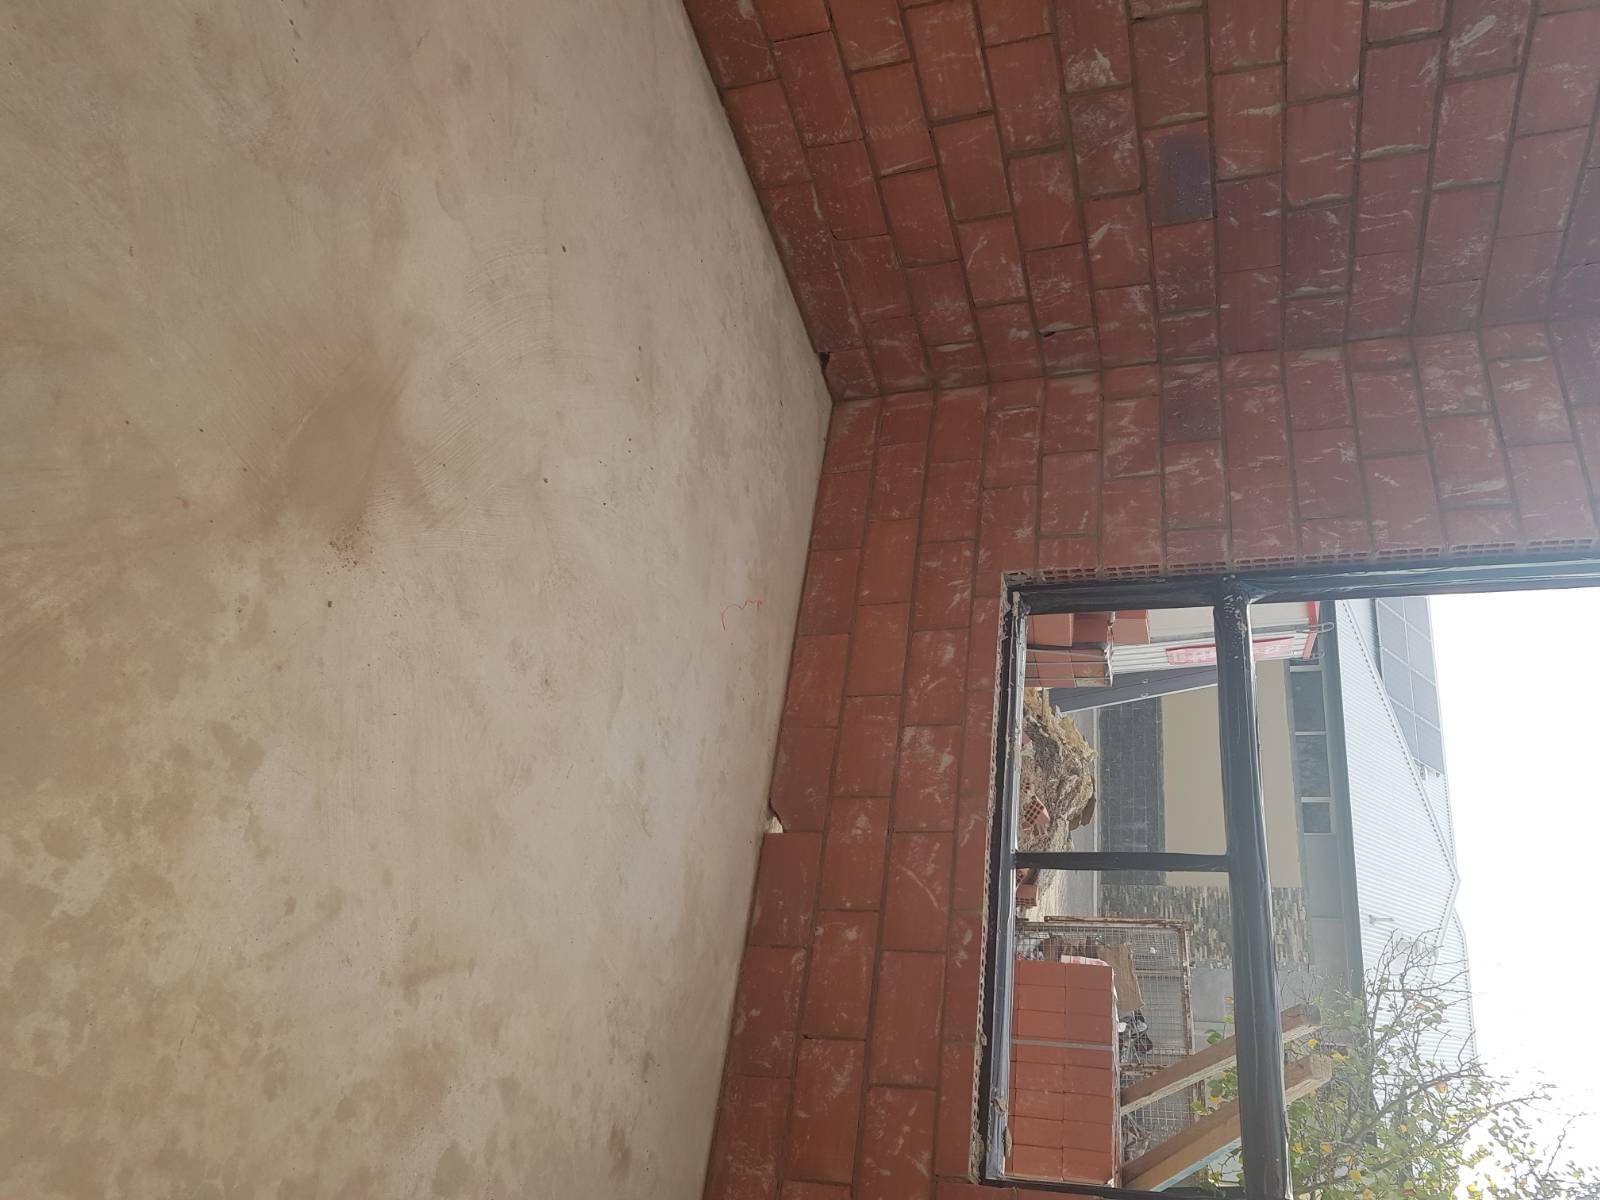 Holes in bricks when building